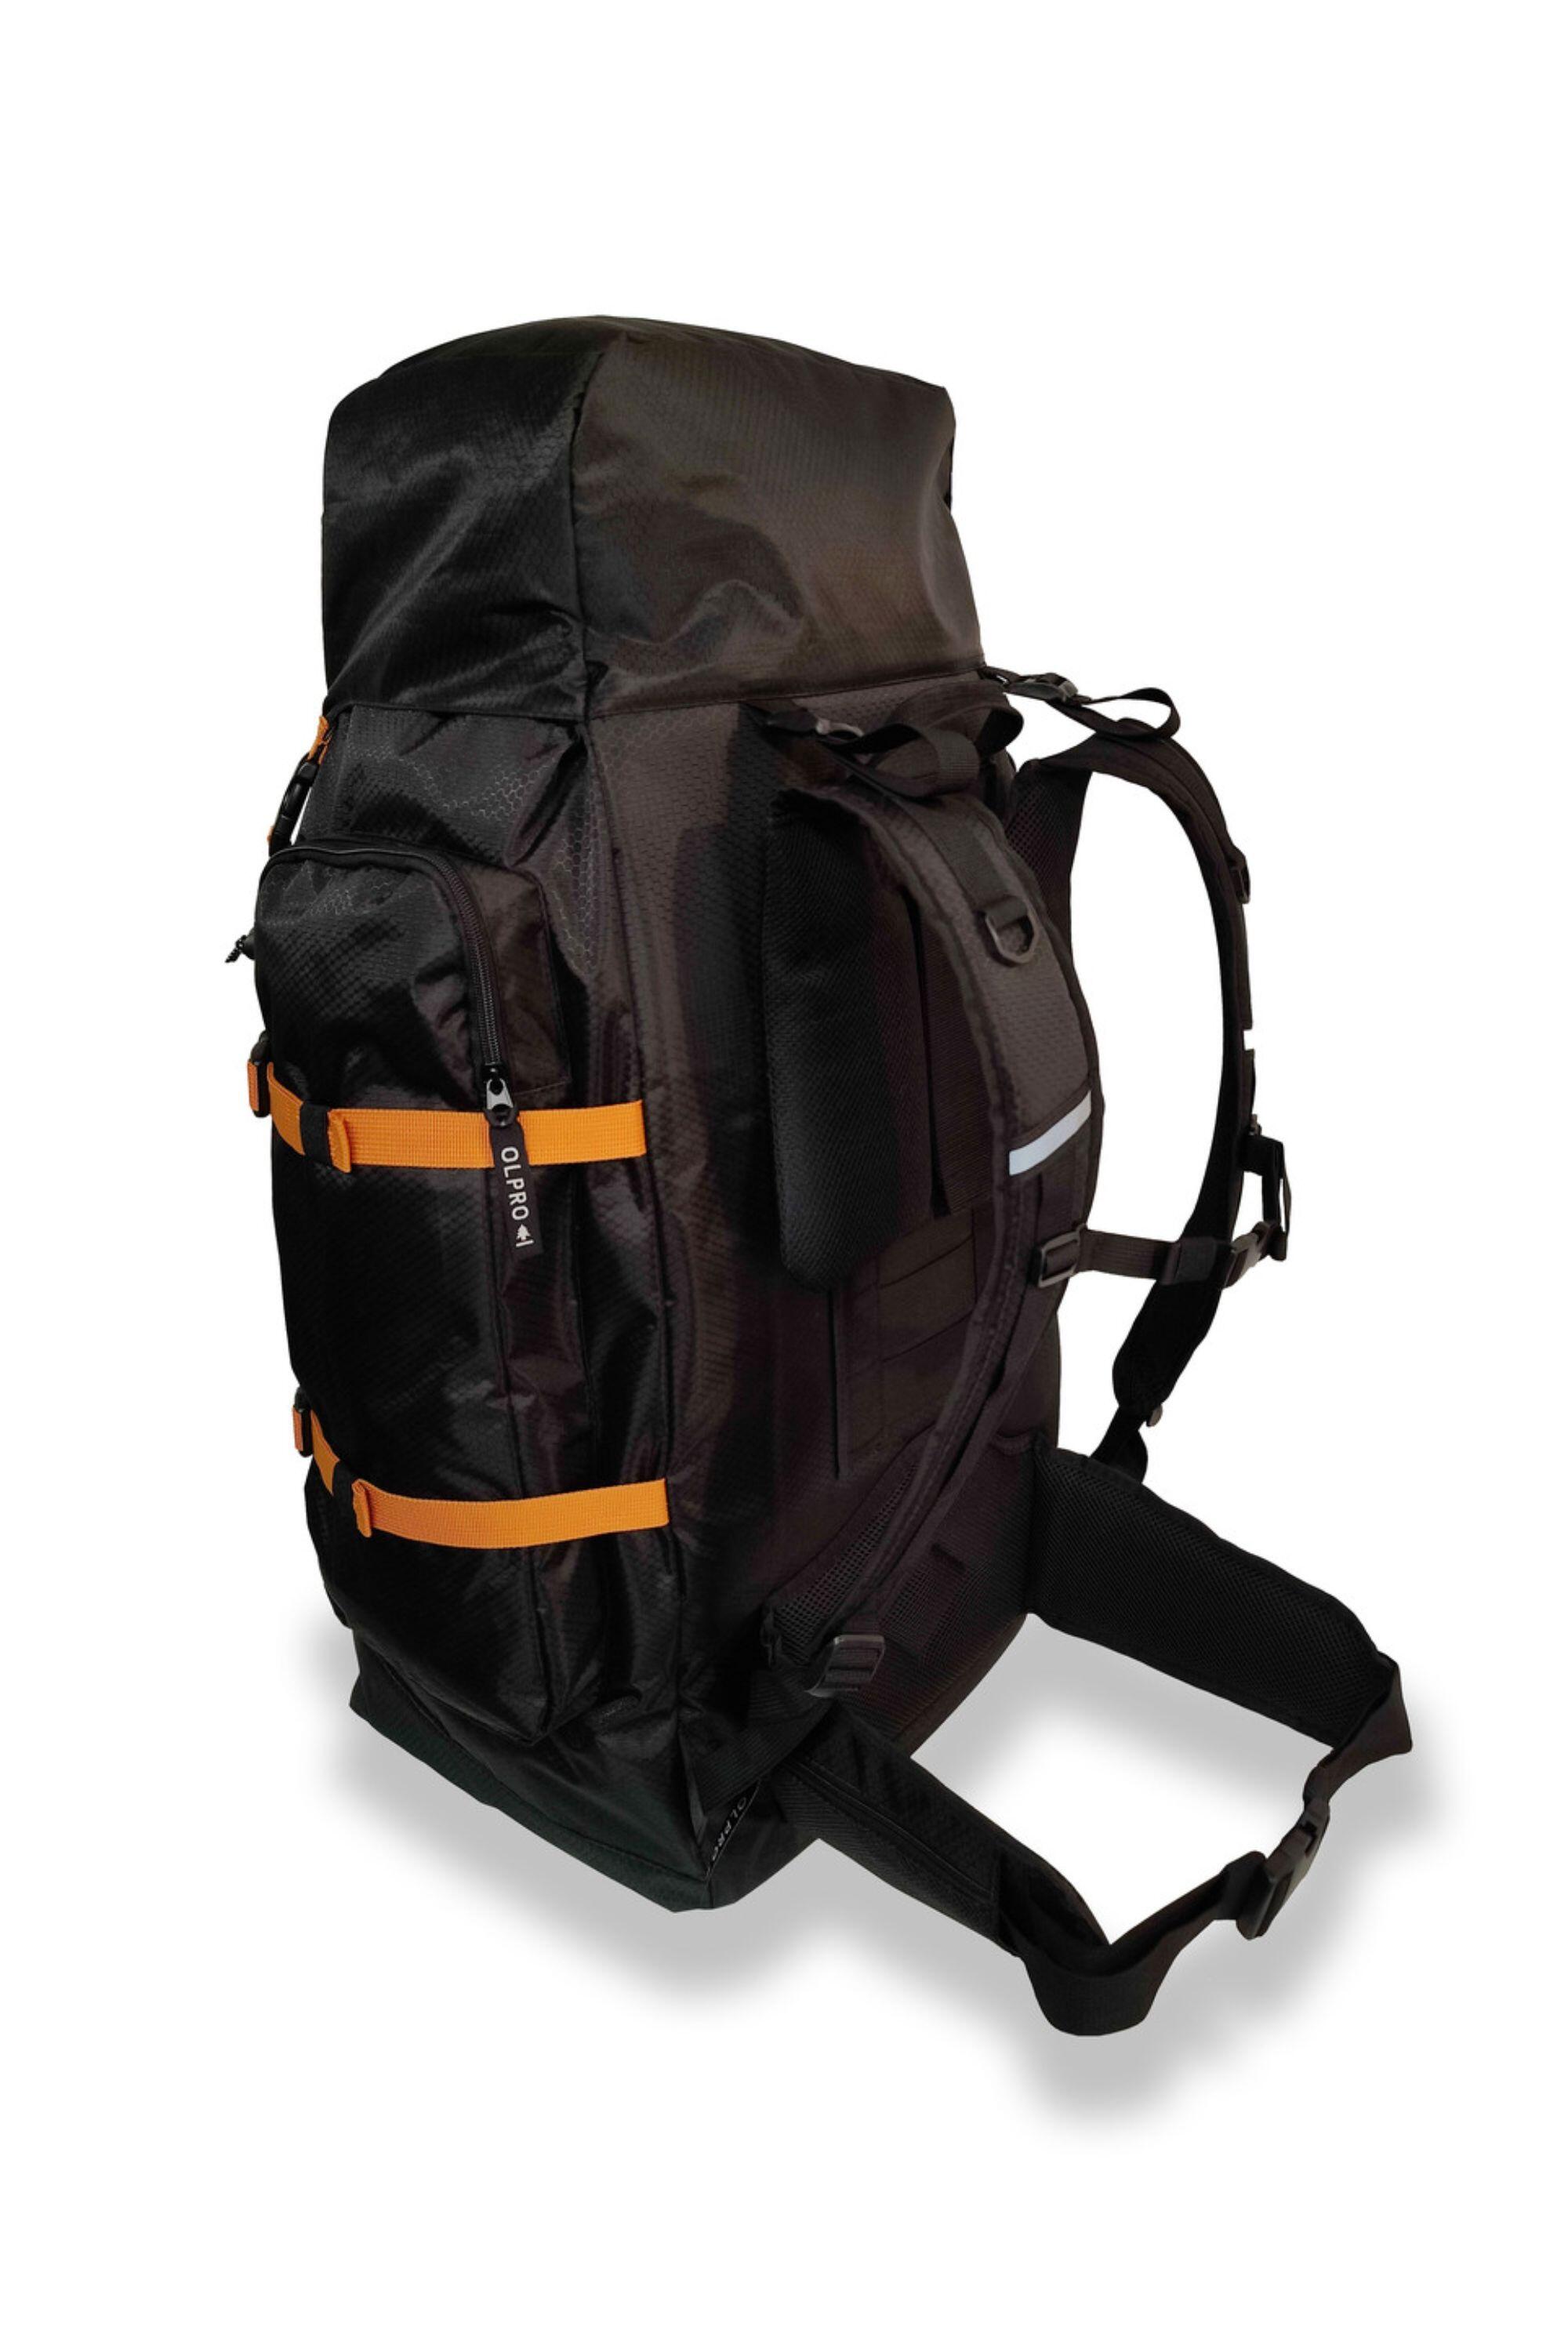 OLPRO 65L Rucksack Bag Black 4/4